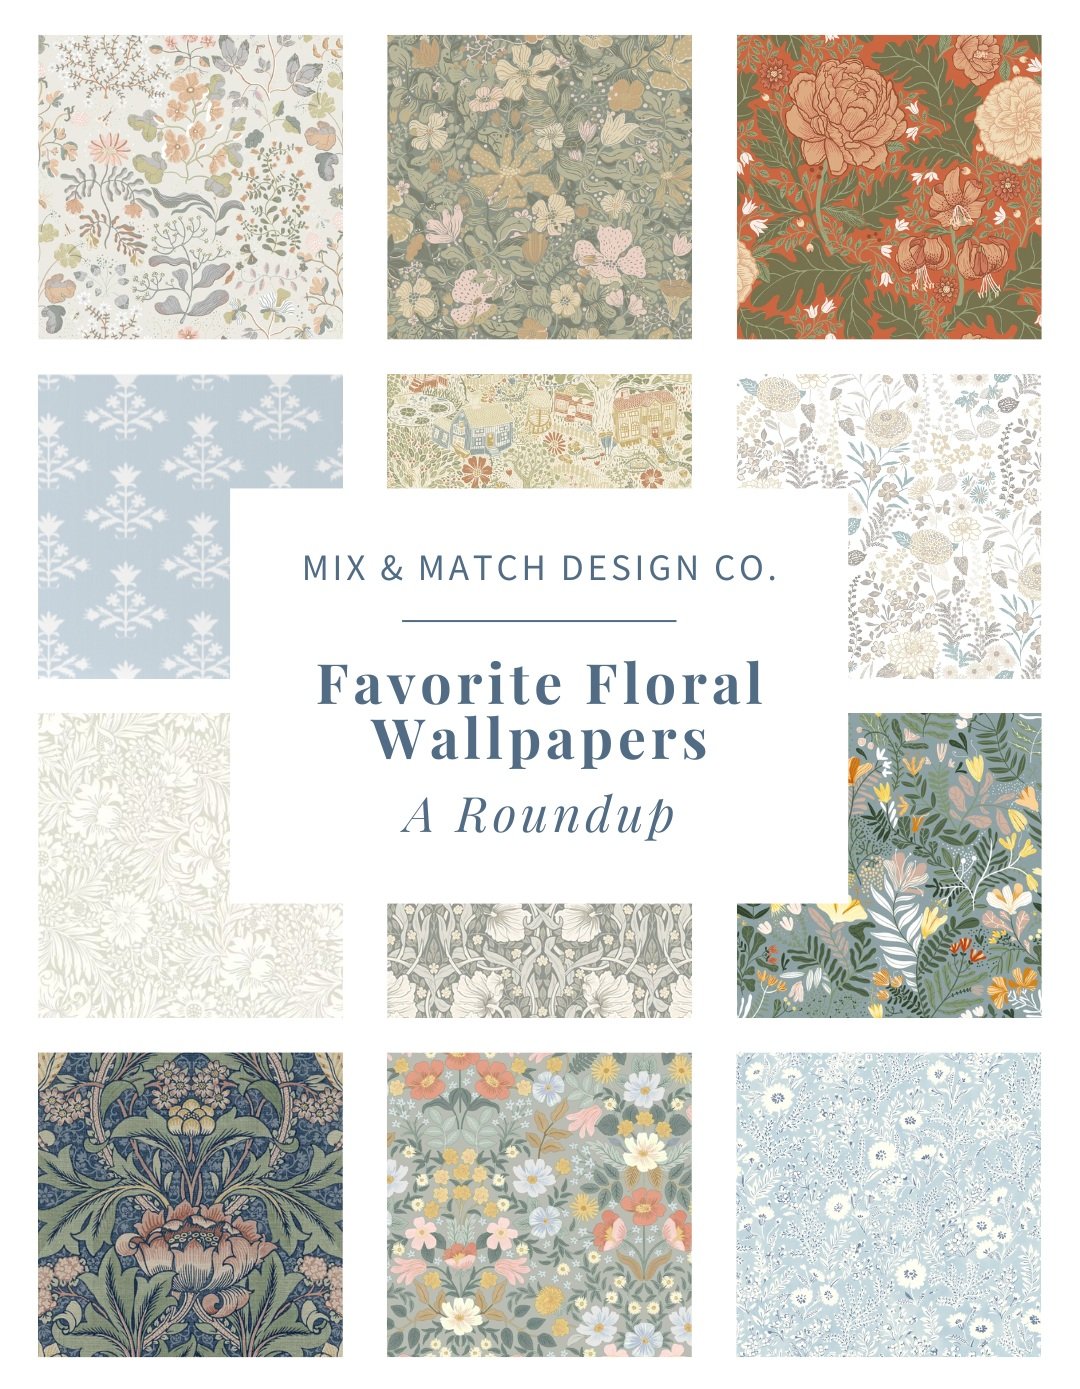 Favorite Floral Wallpaper Roundup